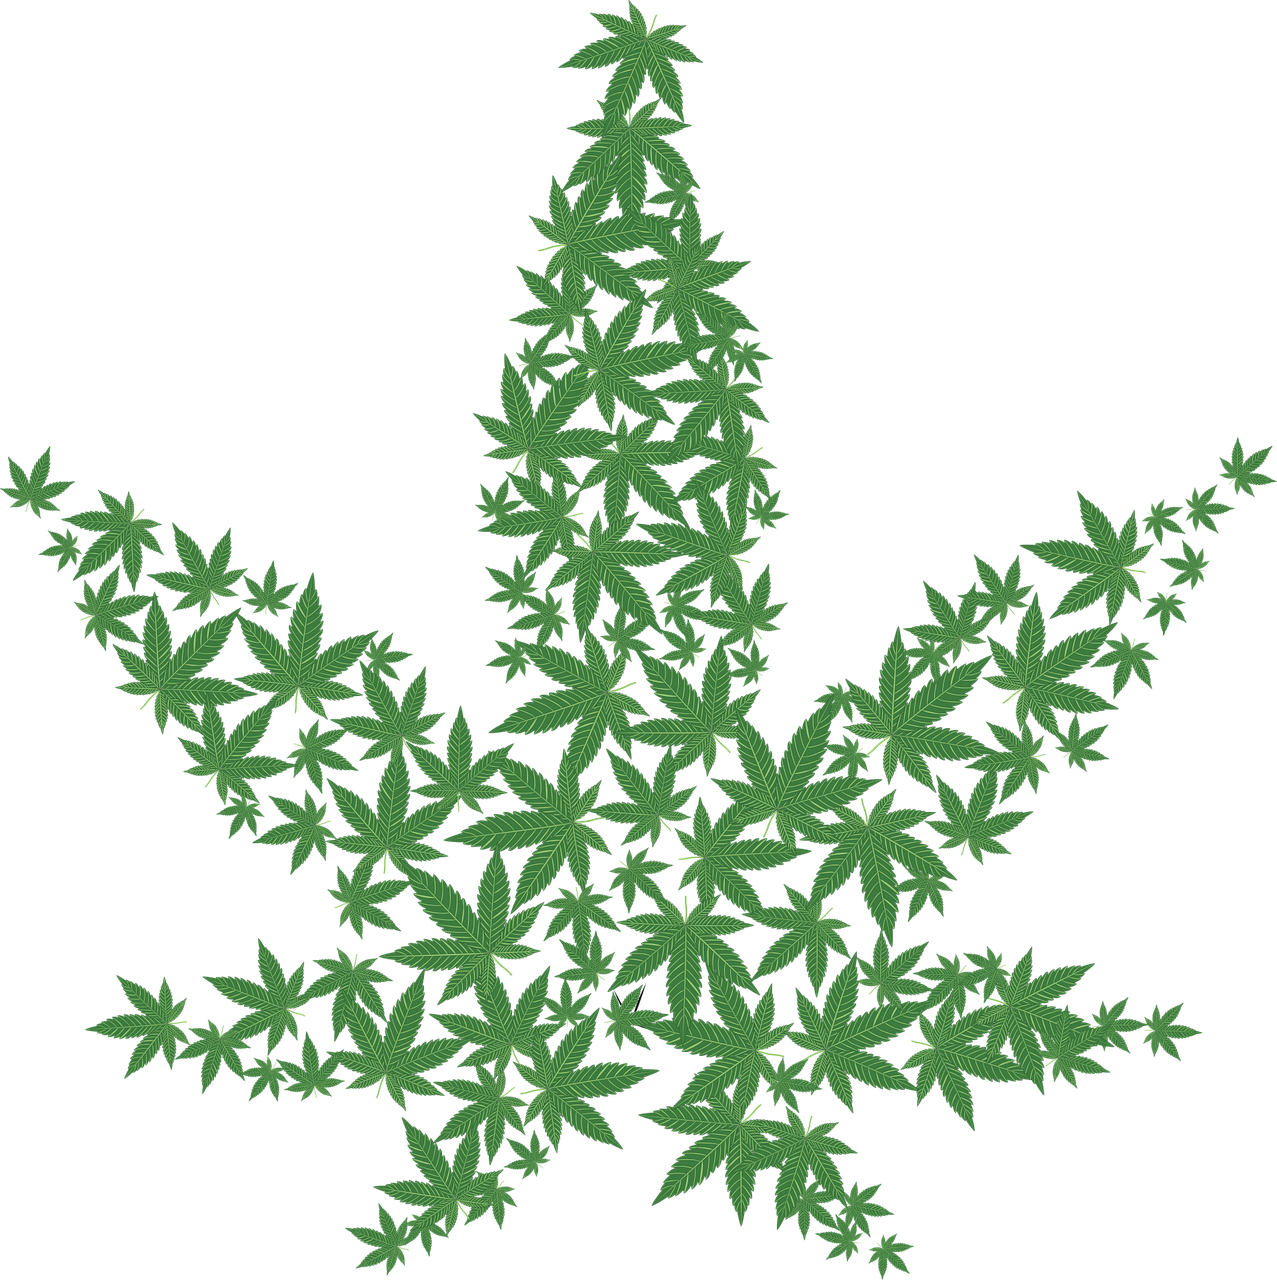 4/20 cannabis, drug, weed, social distancing